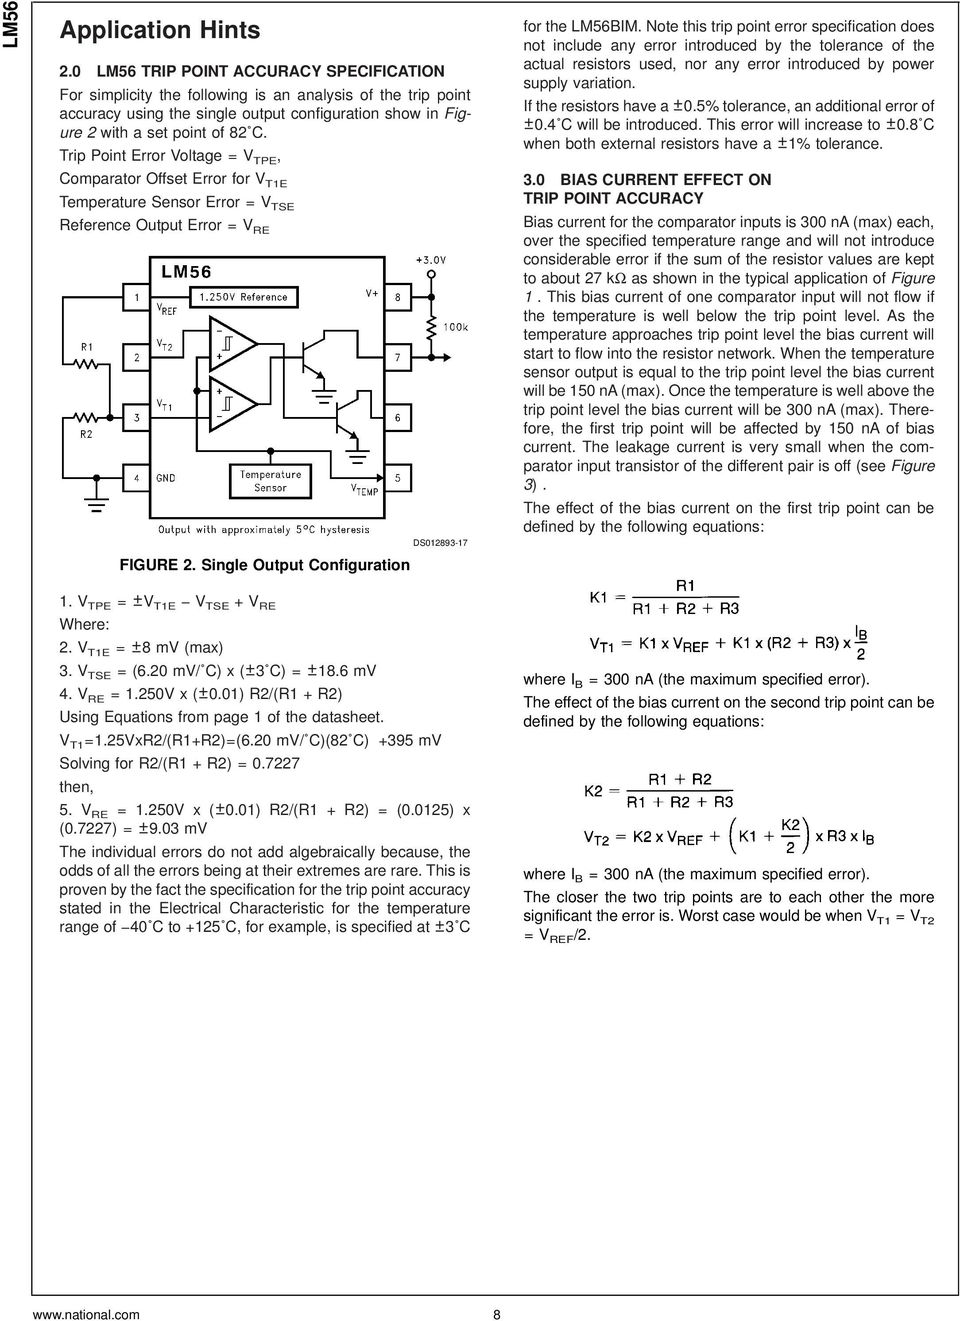 Trip Point Error Voltage = V TPE, Comparator Offset Error for V T1E Temperature Sensor Error = V TSE Reference Output Error = V RE FIGURE 2. Single Output Configuration DS012893-17 for the LM56BIM.